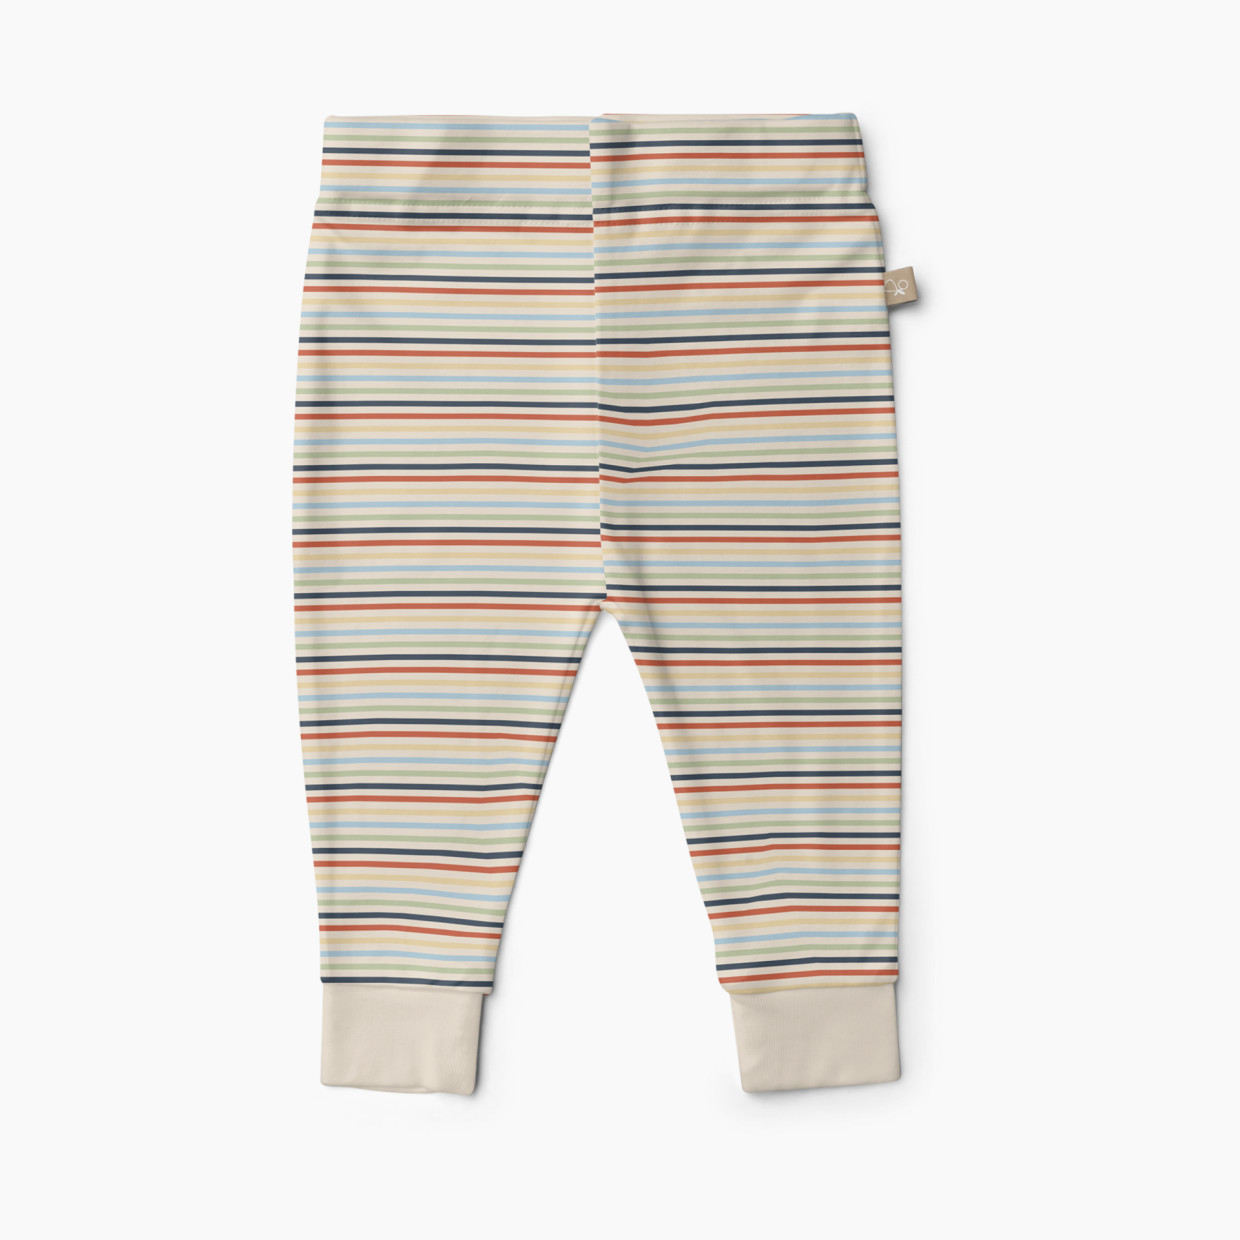 Goumi Kids x Babylist Baby Pants - Warm Stripe, 0-3 M.